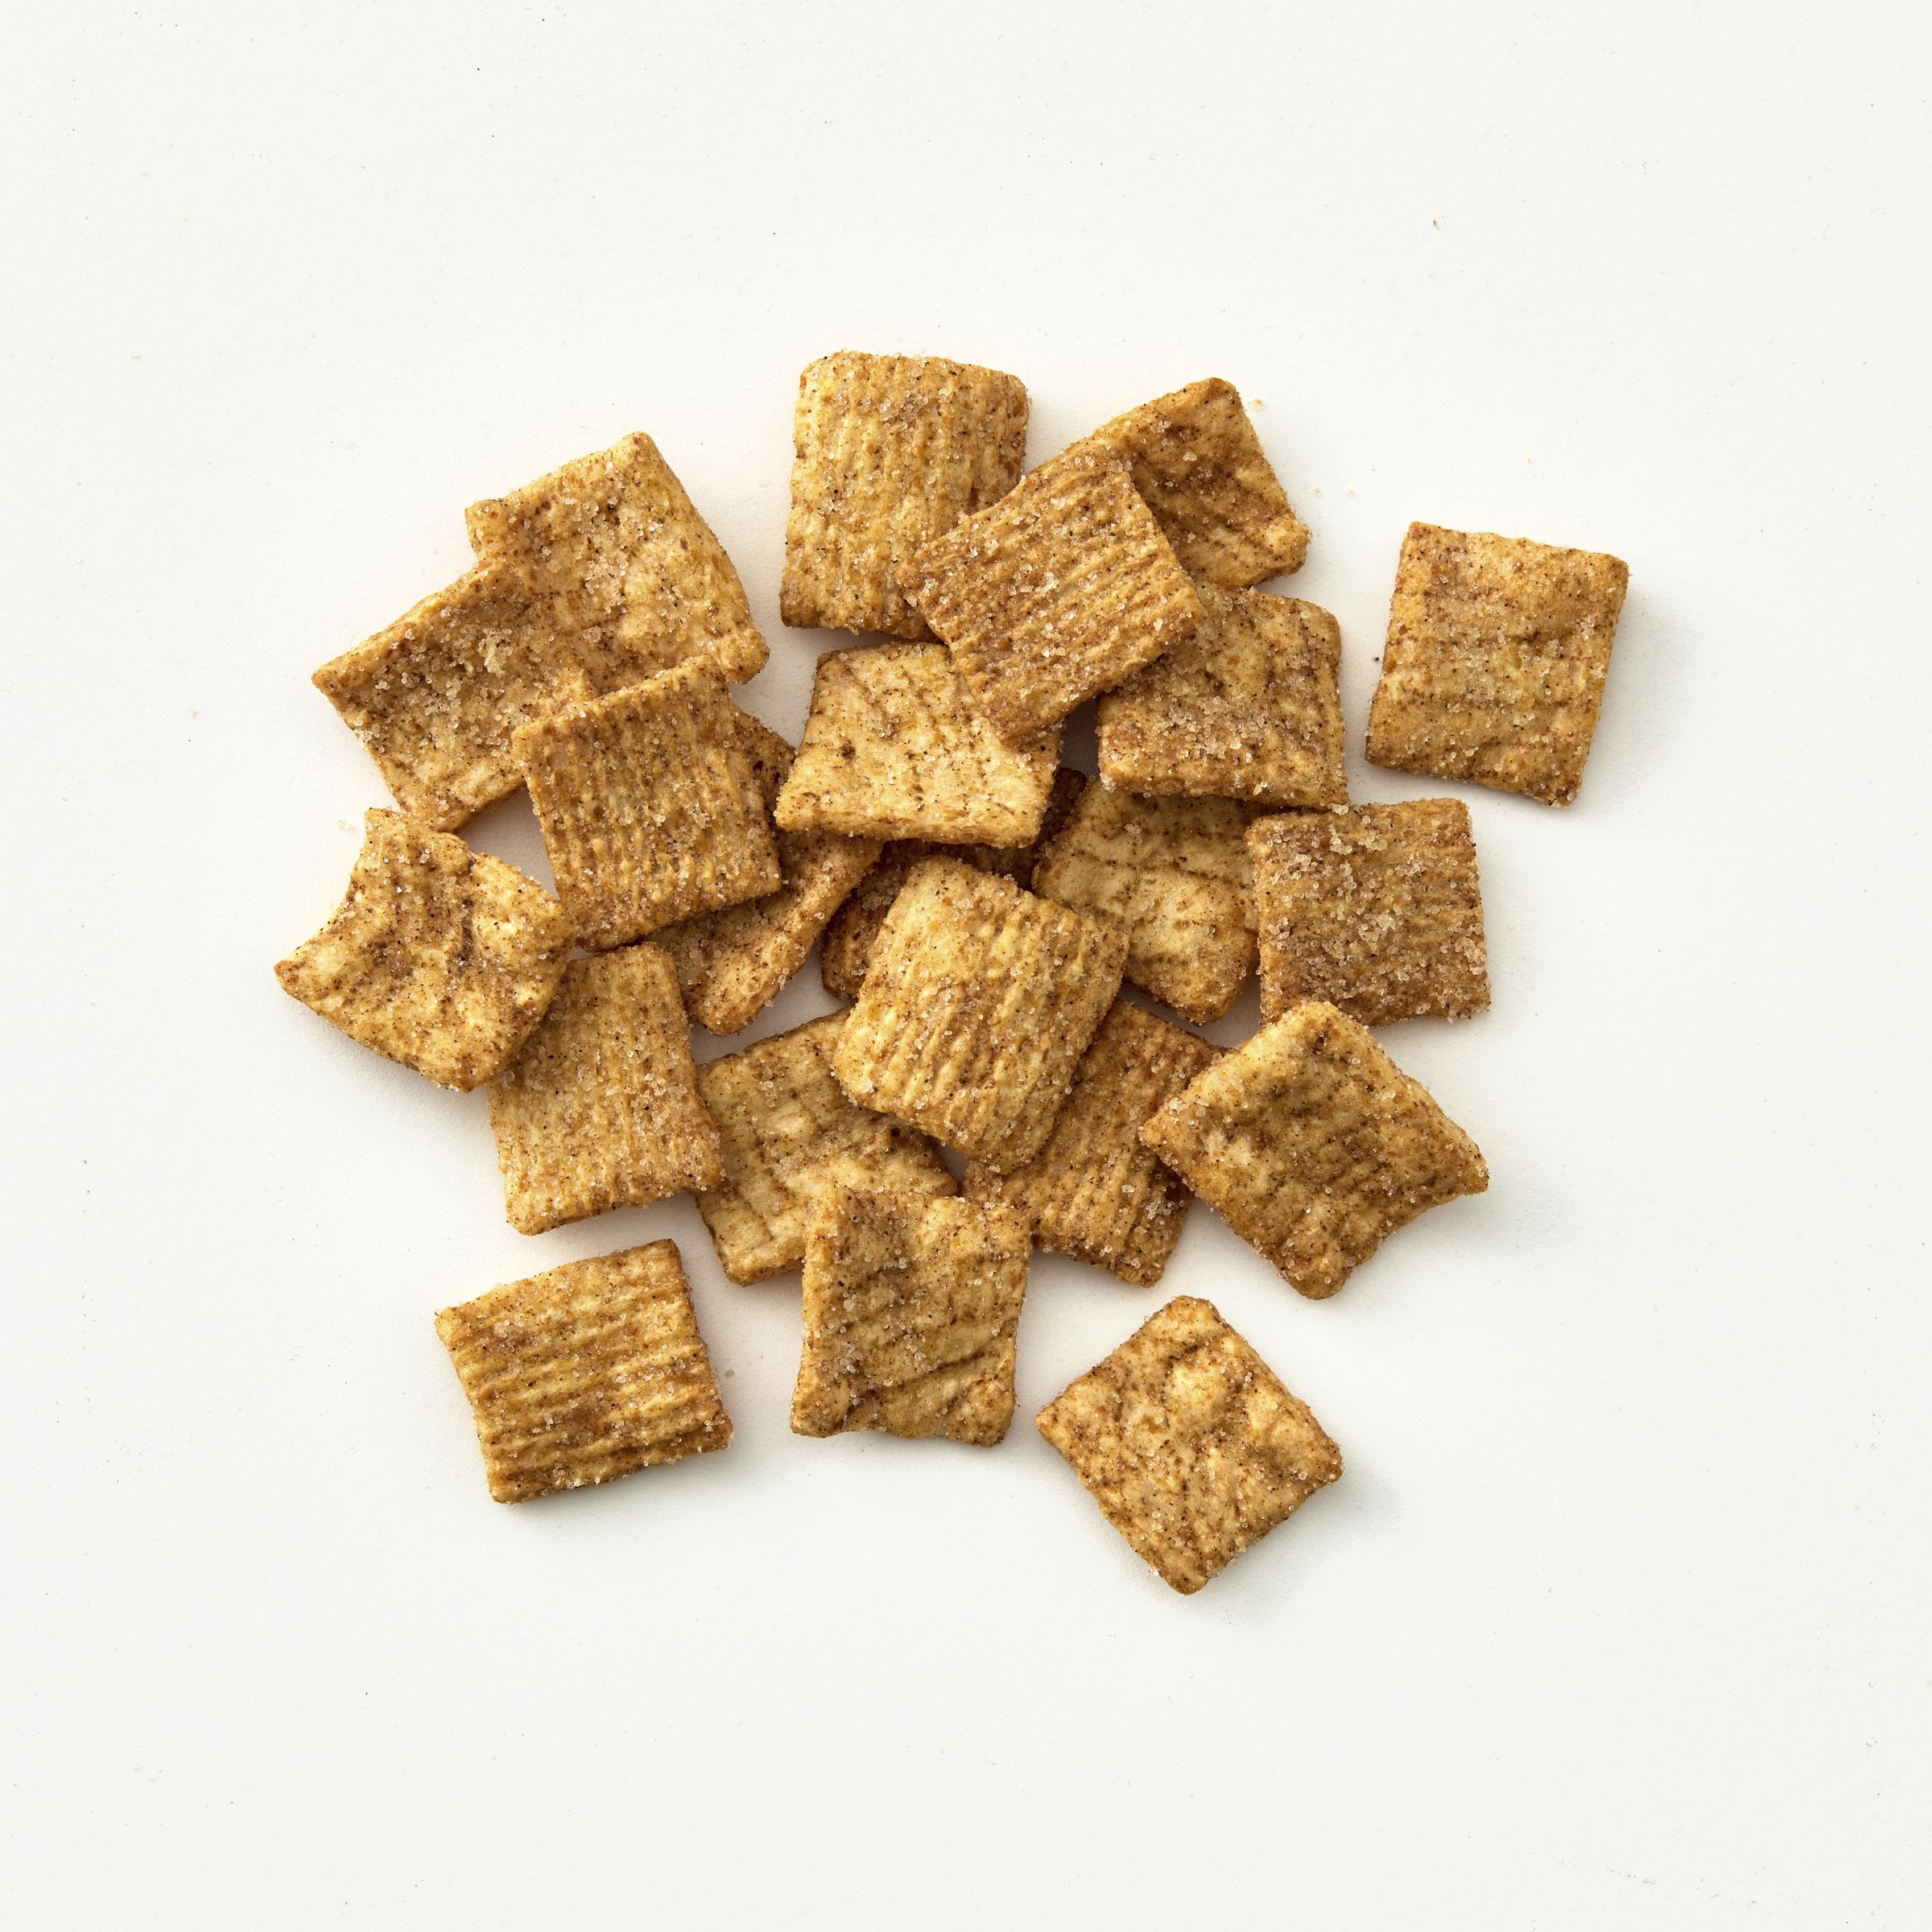 Cinnamon Toast Crunch Cereal - 2.0 oz